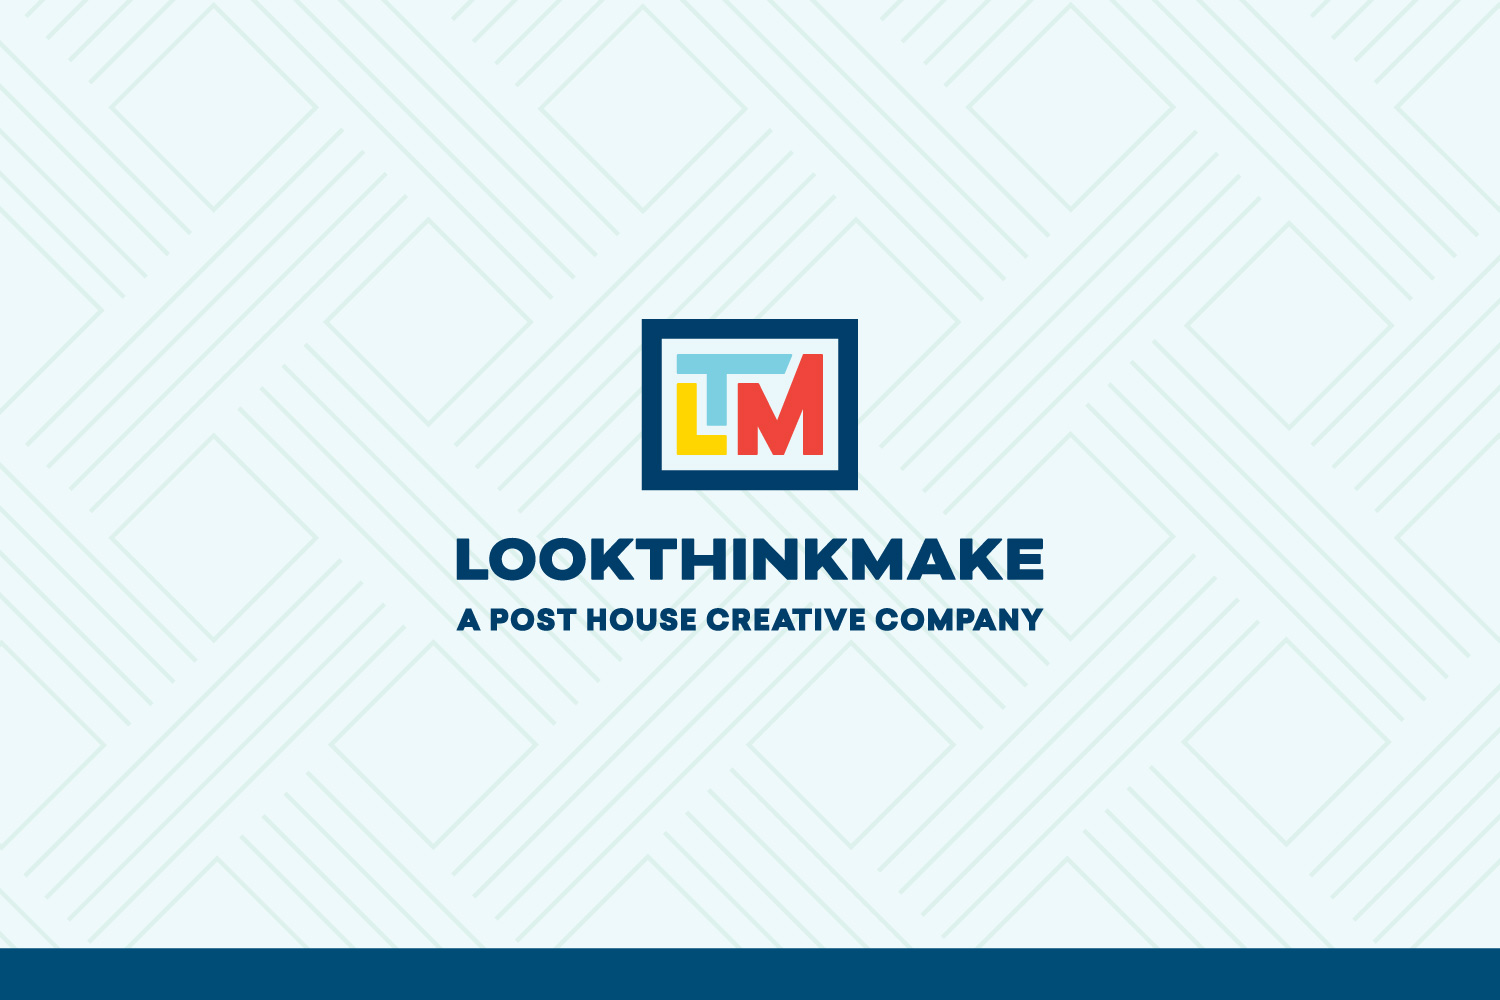 lookthinkmake: a Post House Creative company